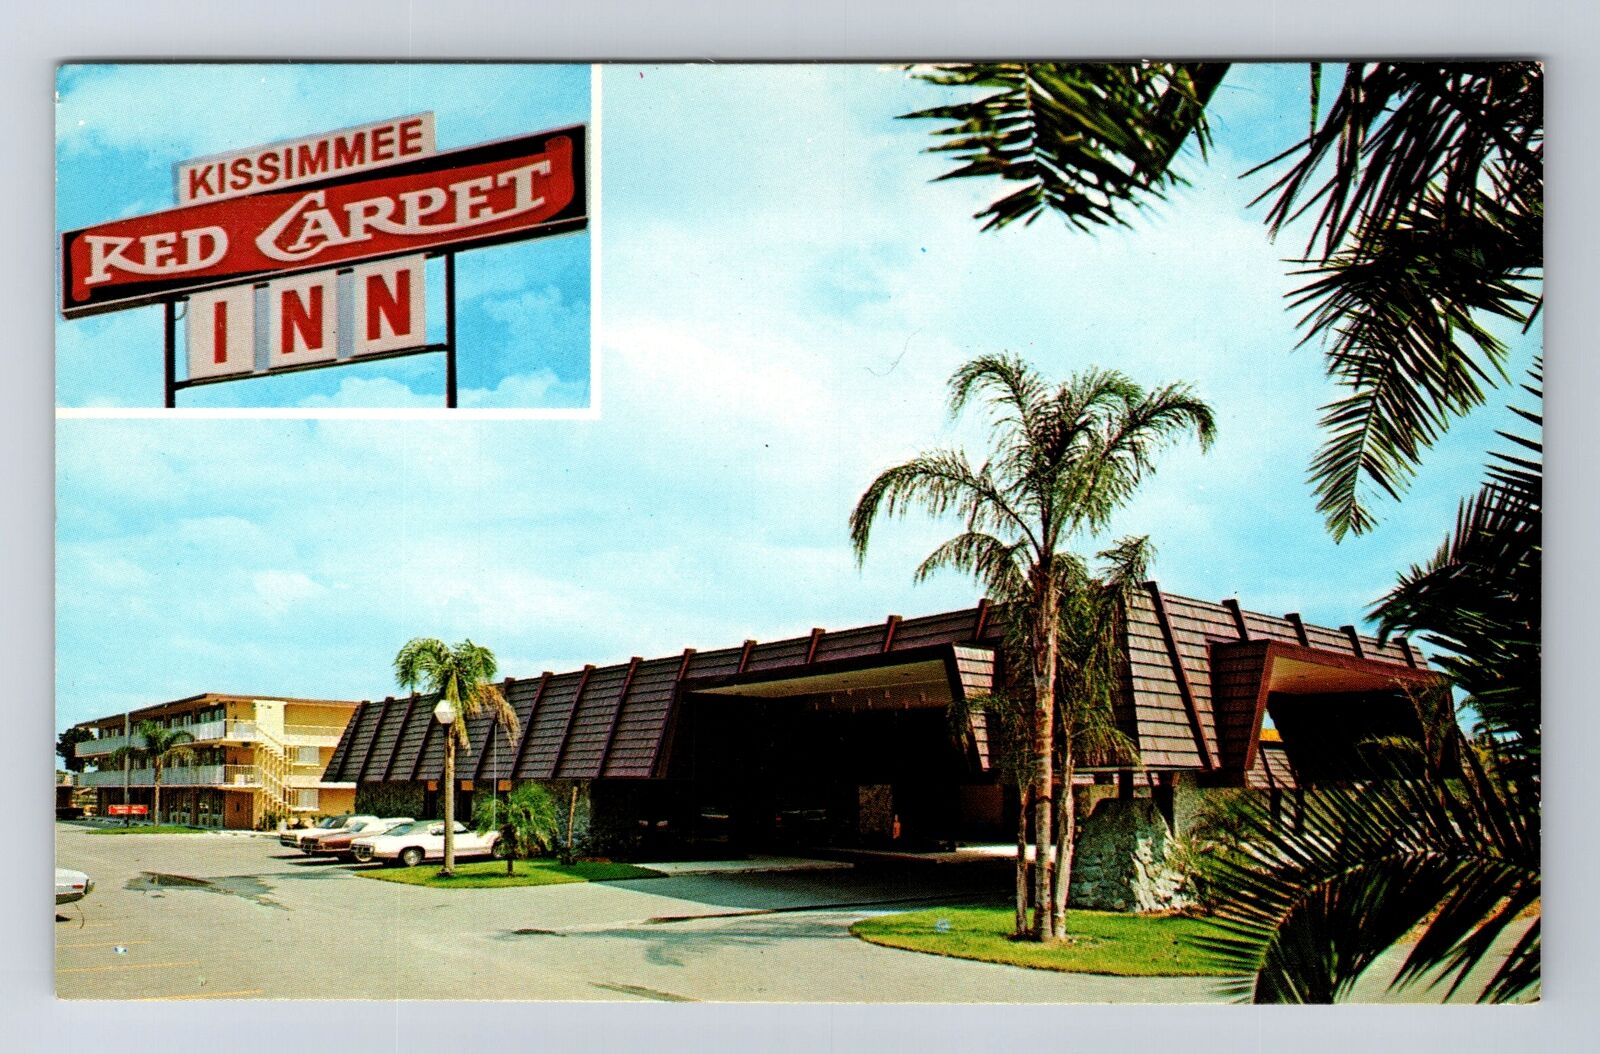 Kissimmee FL-Florida, Kissimmee Red Carpet Inn, Advertisment, Vintage Postcard